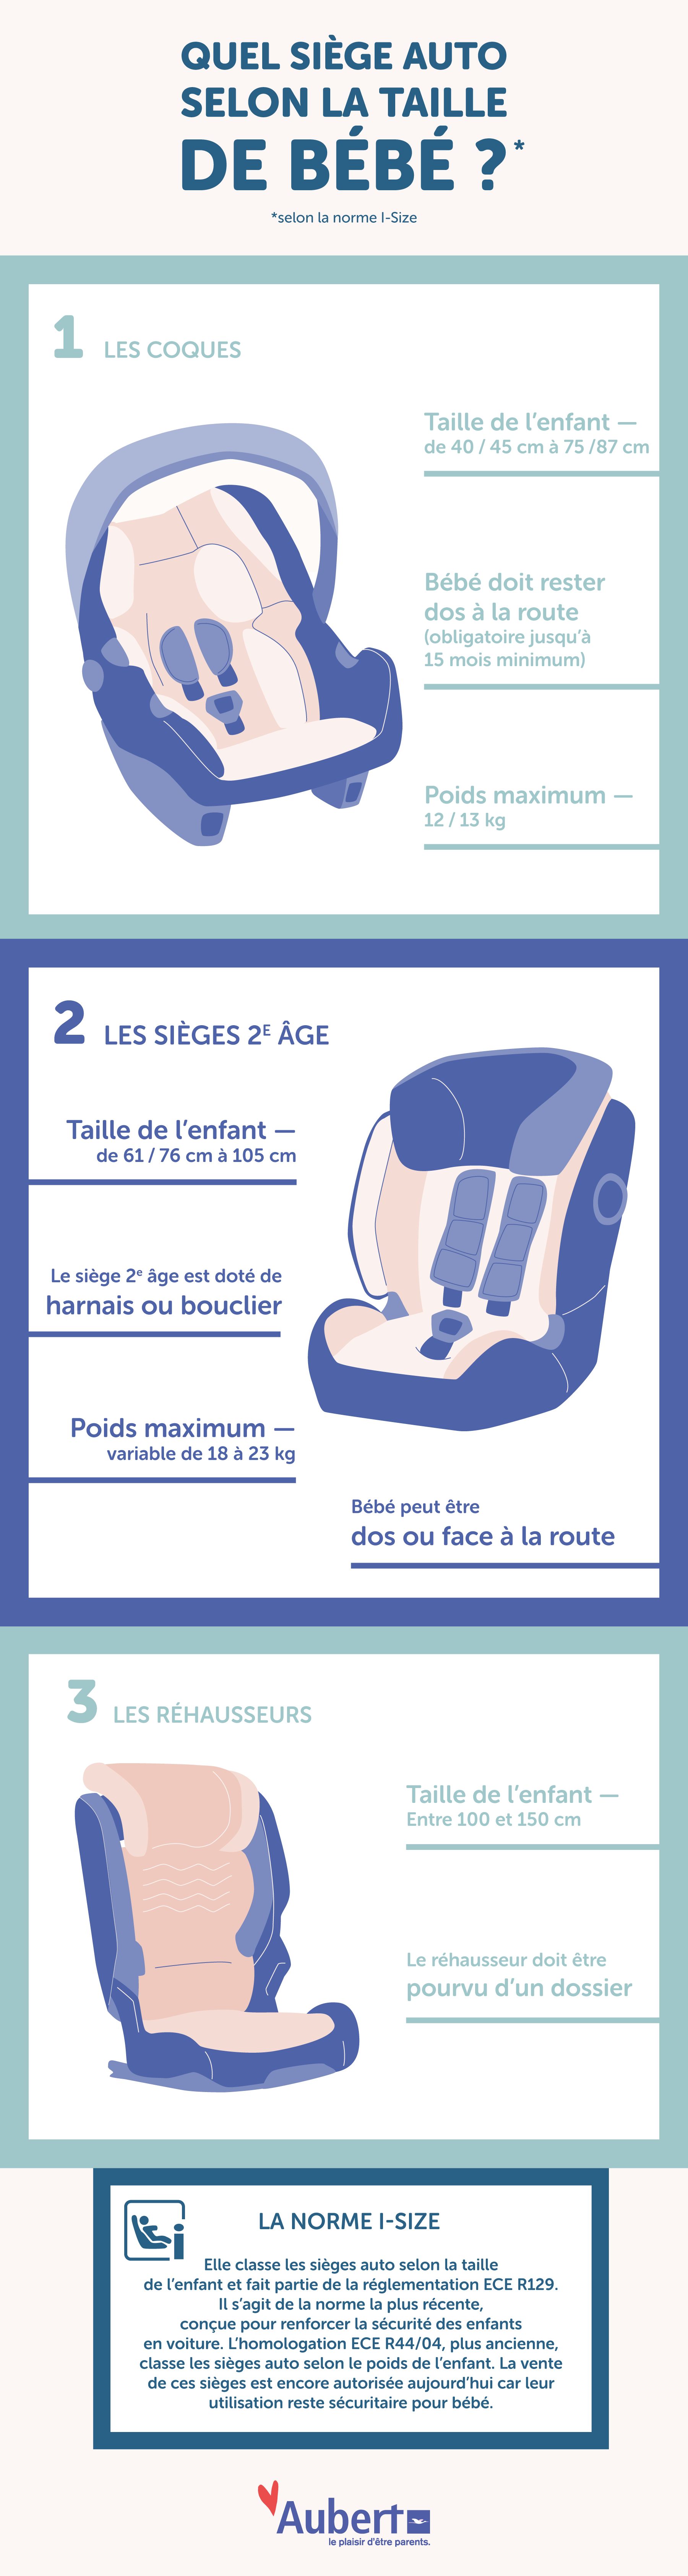 Réglementation: utilisation des sièges enfants